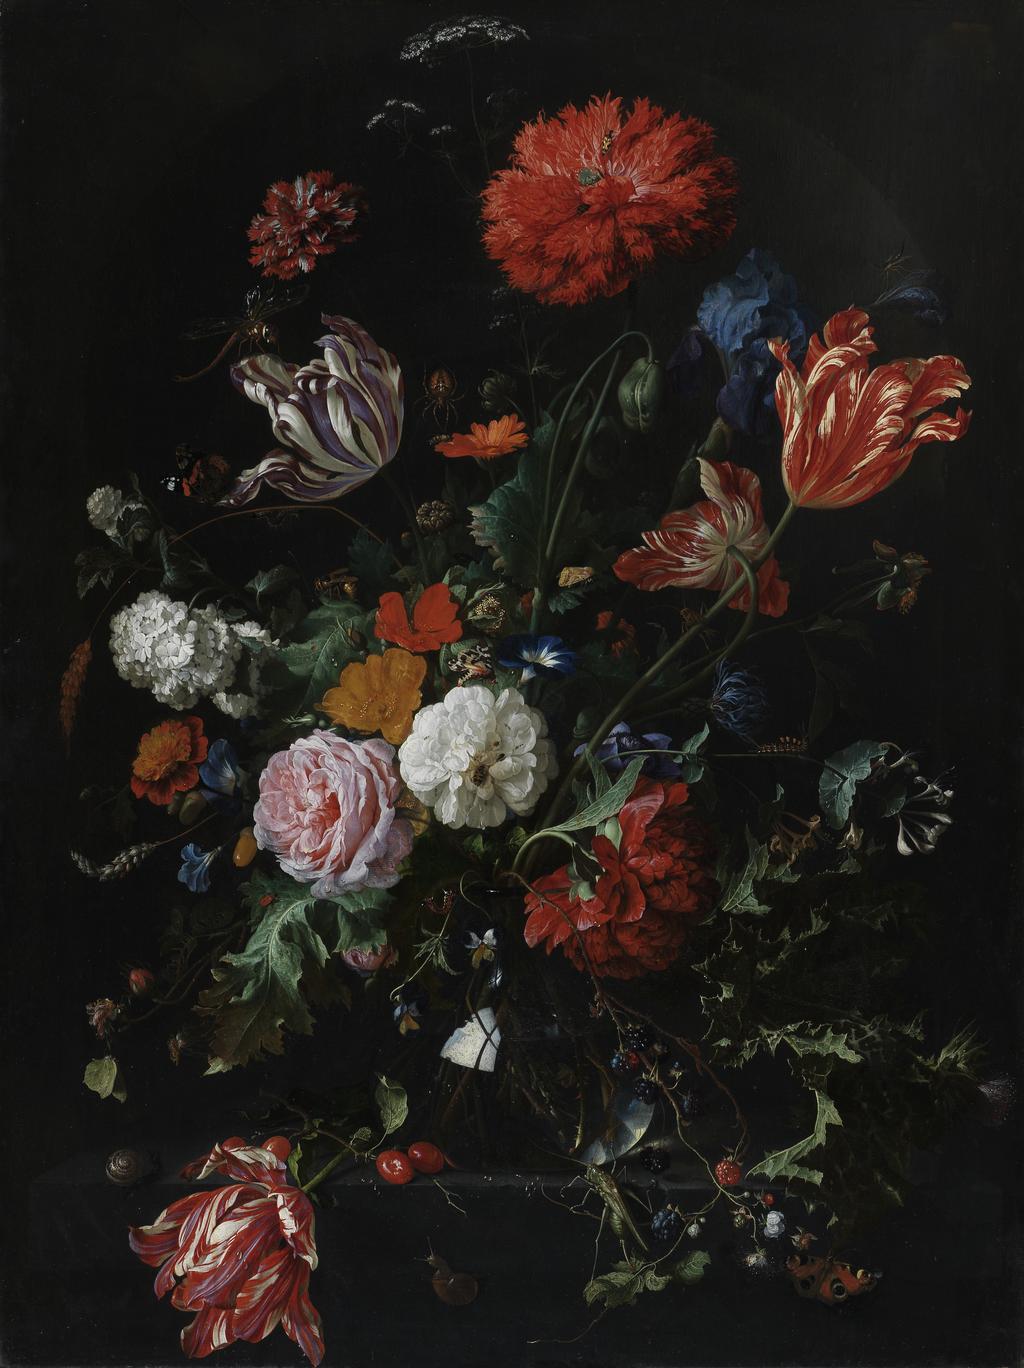 An image of Flowers in a glass vase. Heem, Jan Davidsz. de (Dutch, 1606-1683/4). Oil on panel, height 93.2 cm, width 69.6 cm. Dutch/Flemish School. 